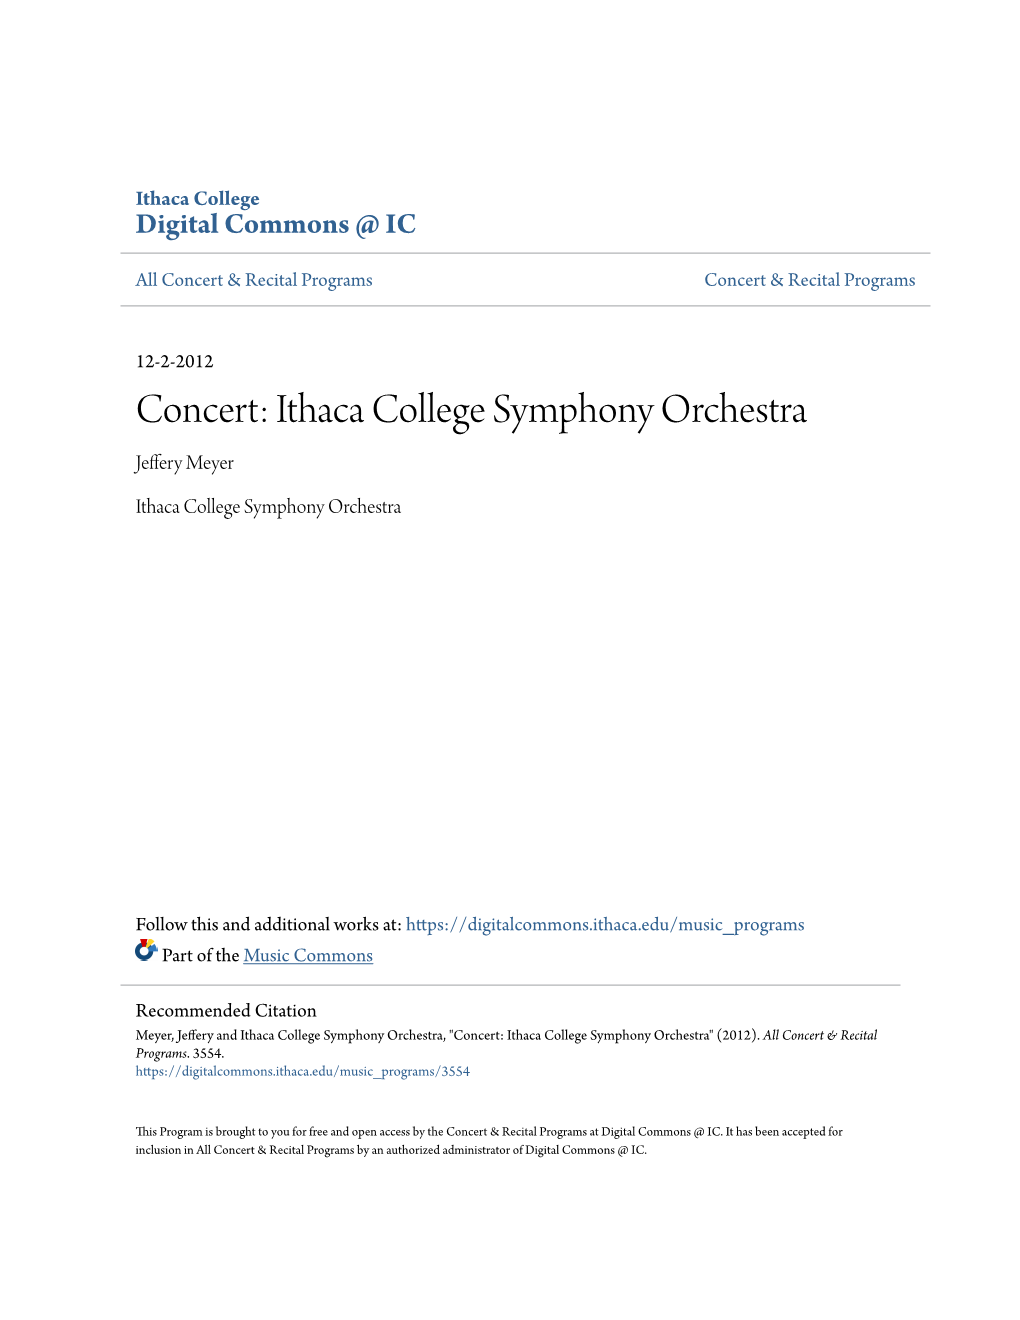 Concert: Ithaca College Symphony Orchestra Jeffery Meyer